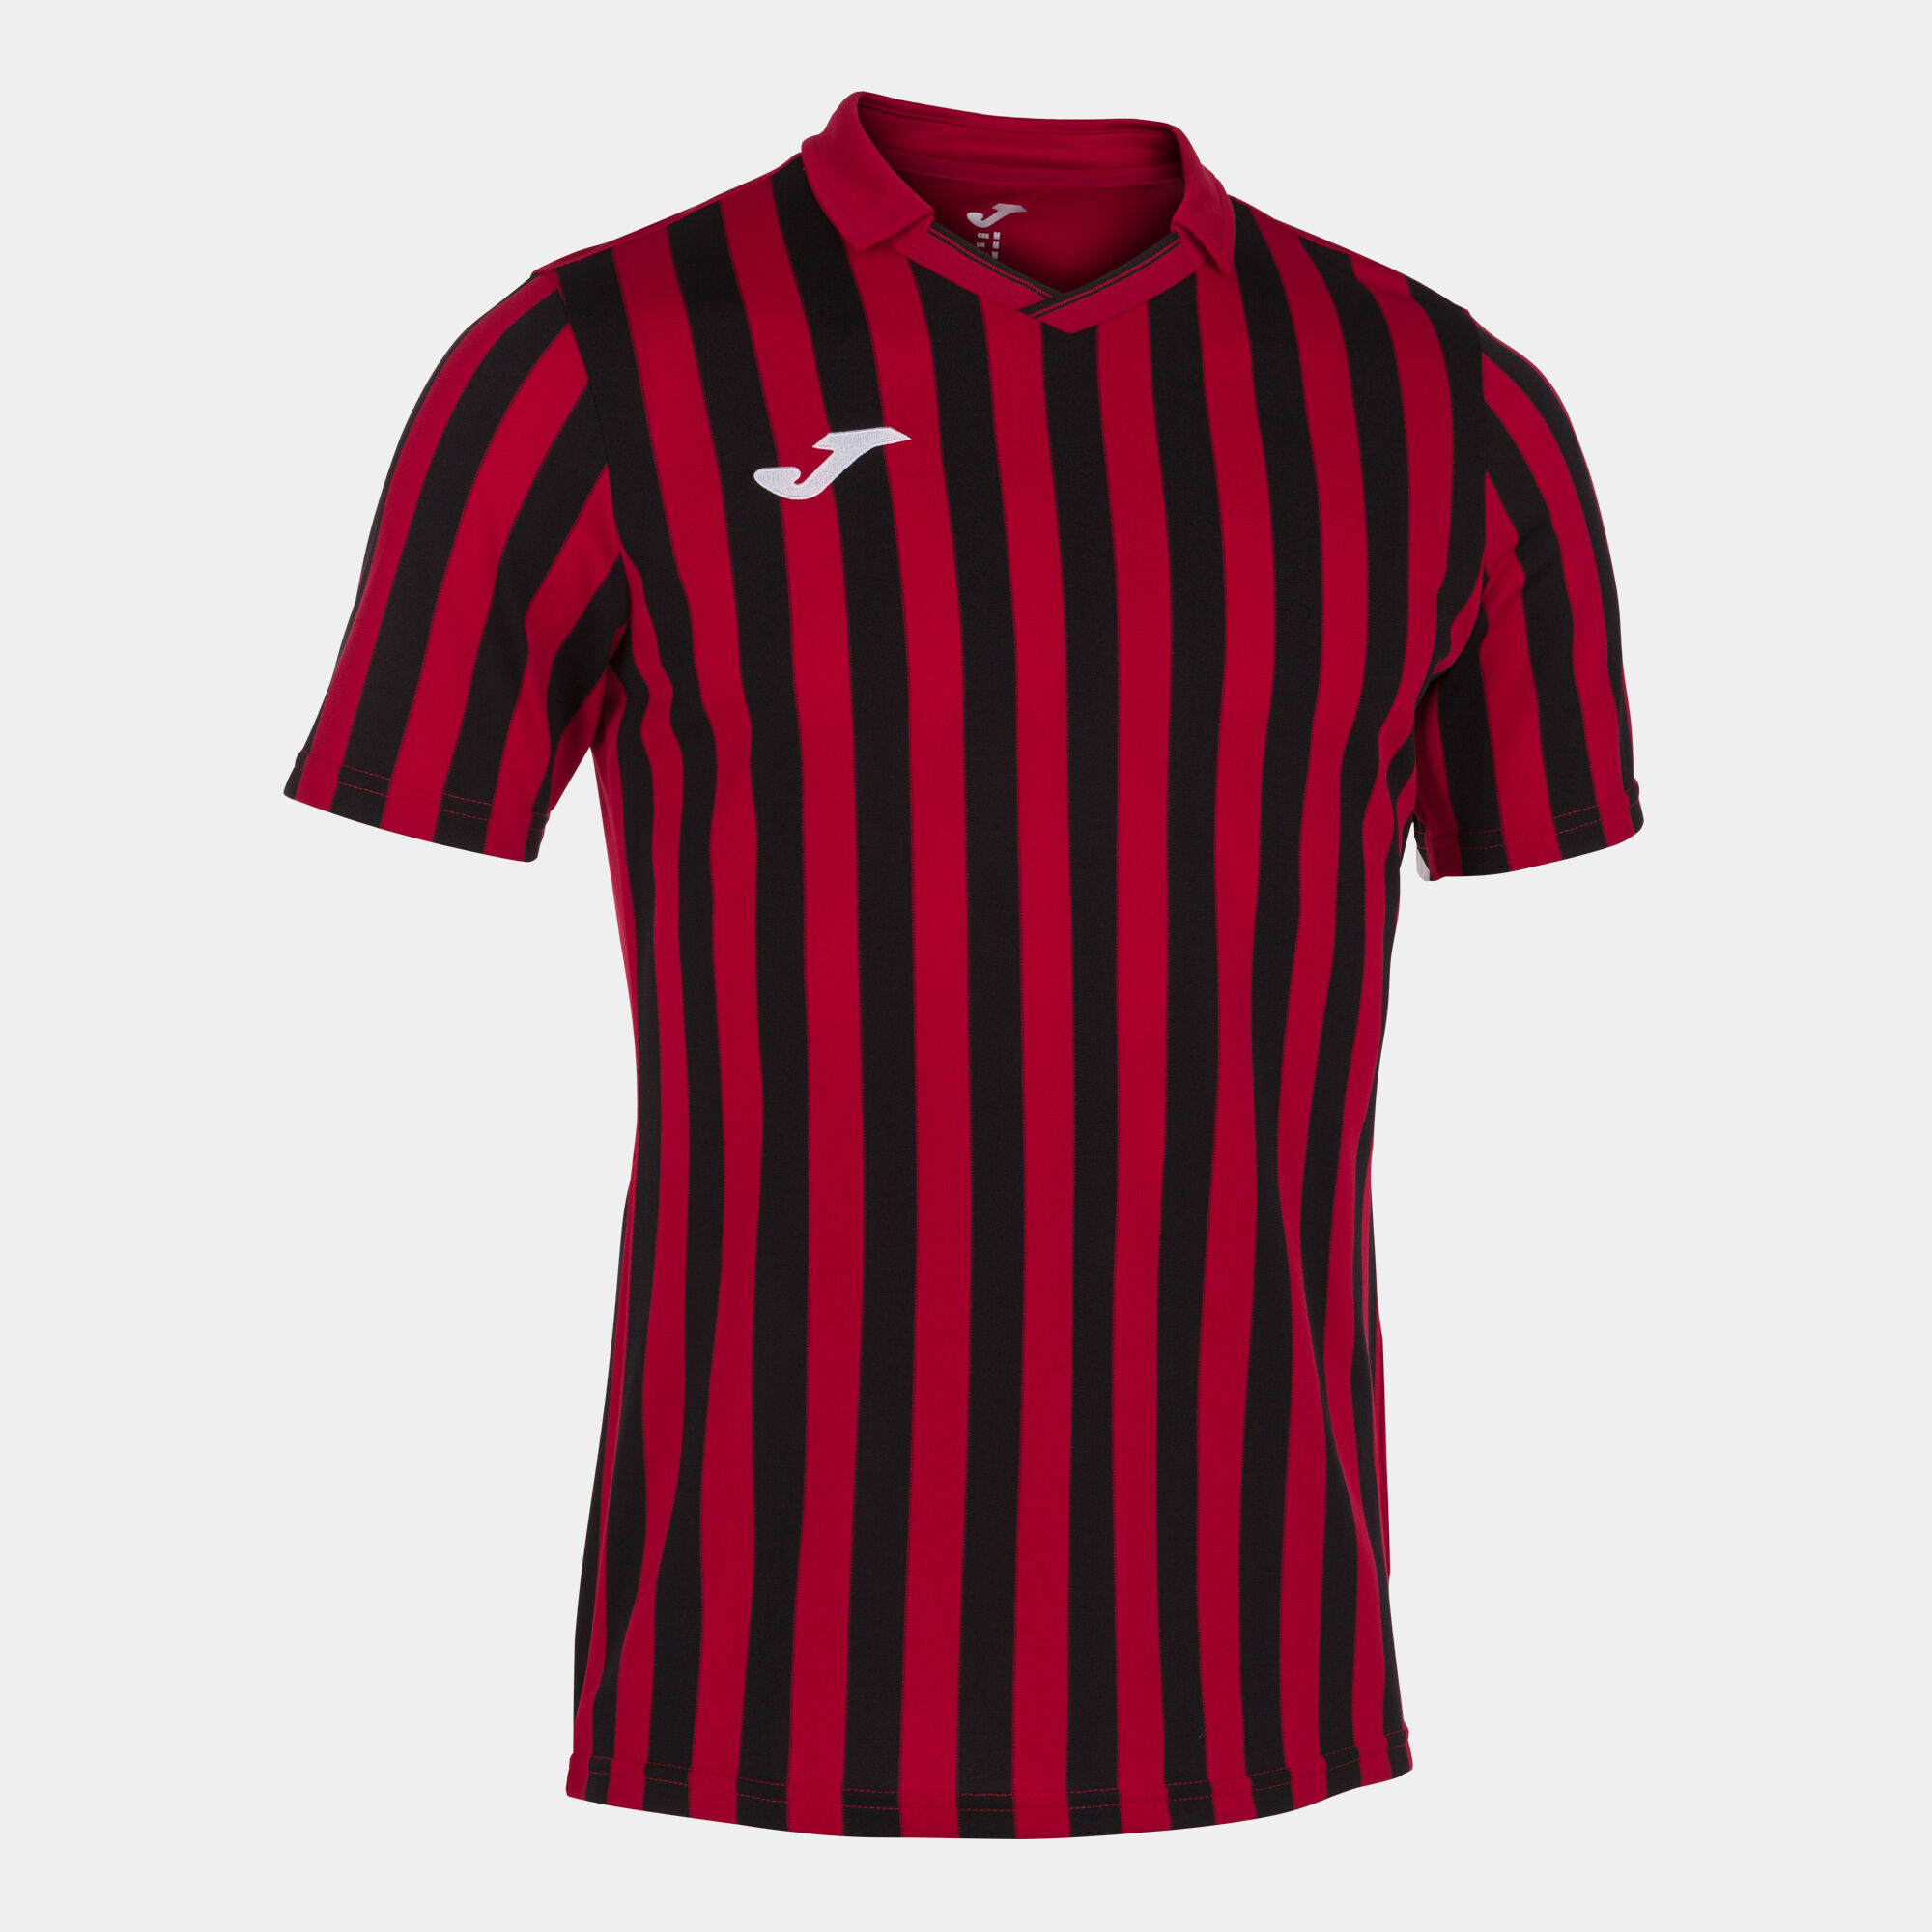 Camiseta manga corta hombre Copa II rojo negro